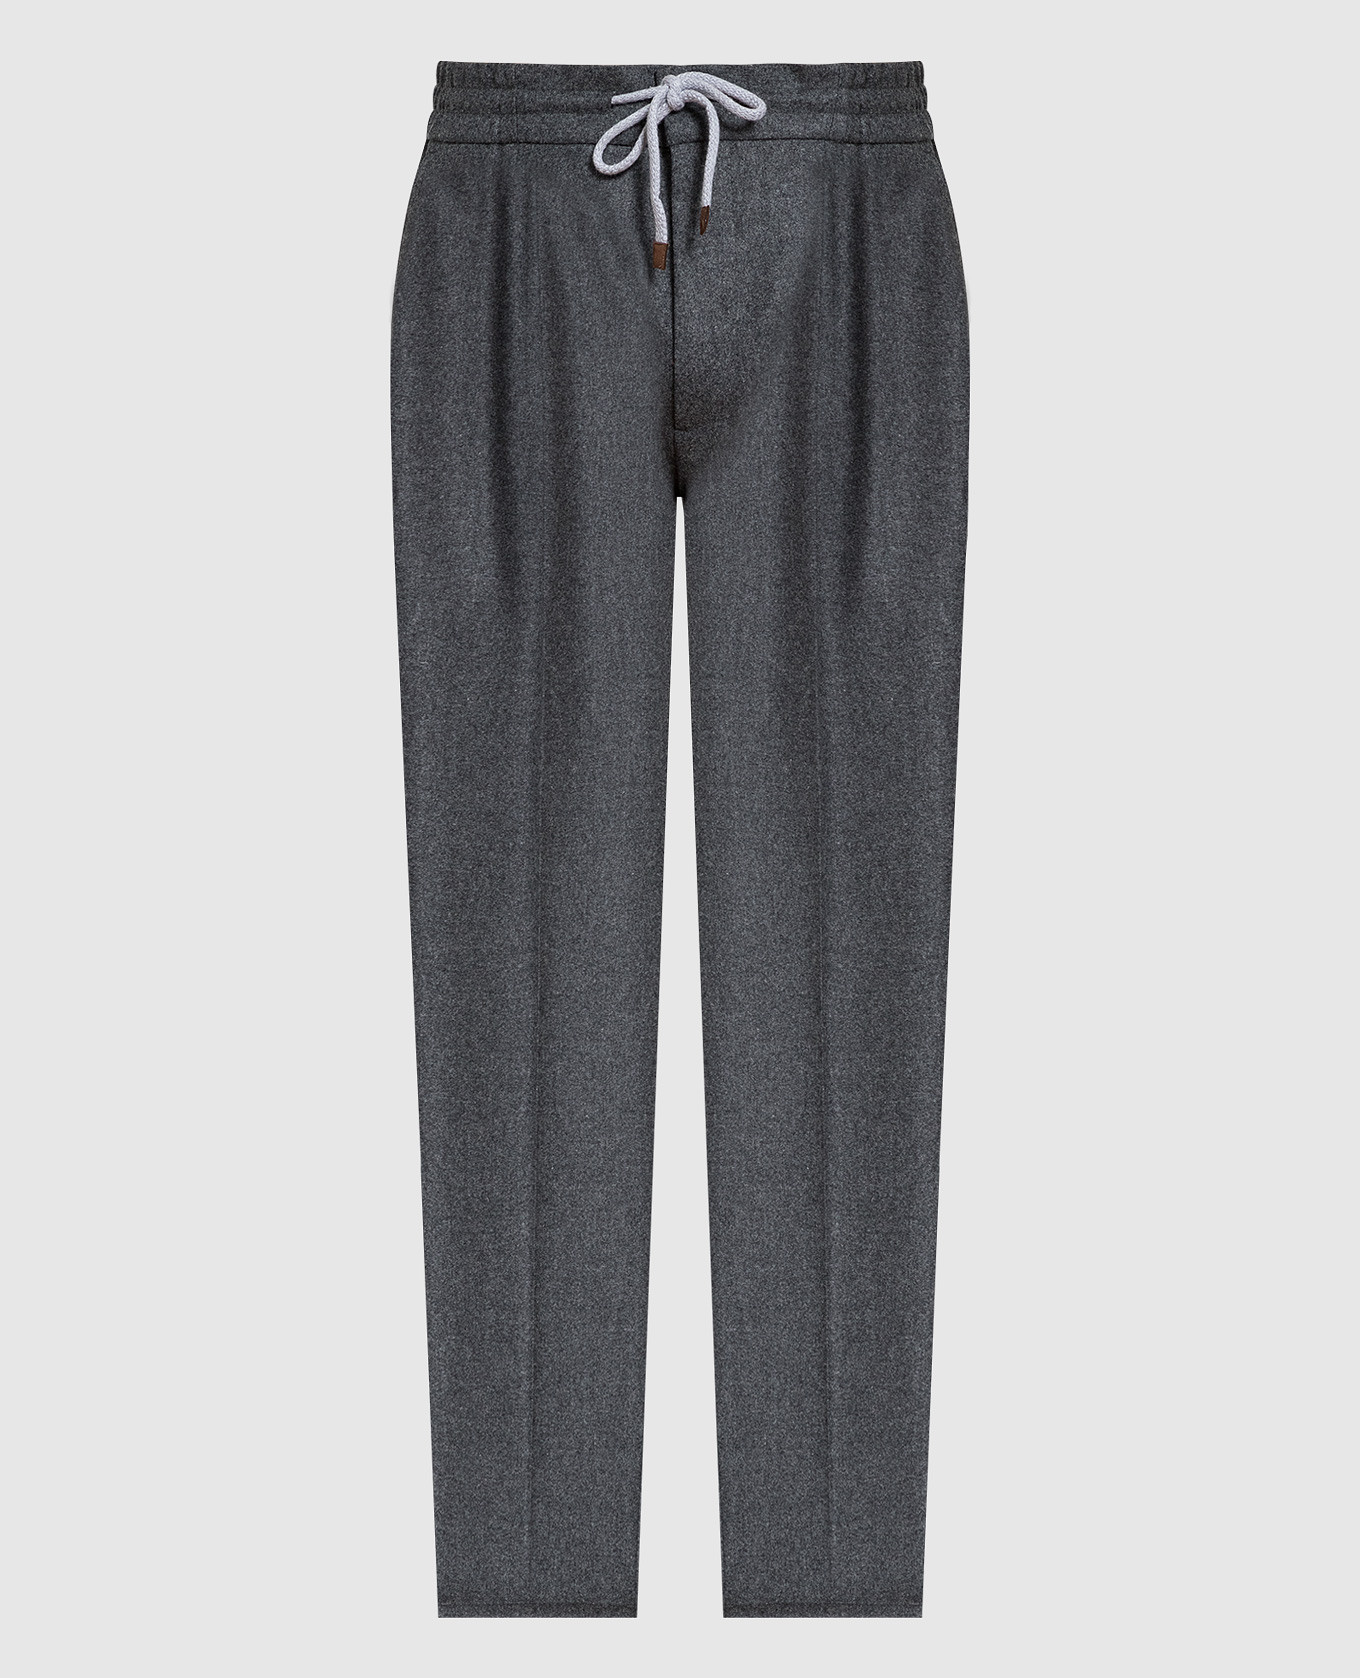 Gray pants made of wool